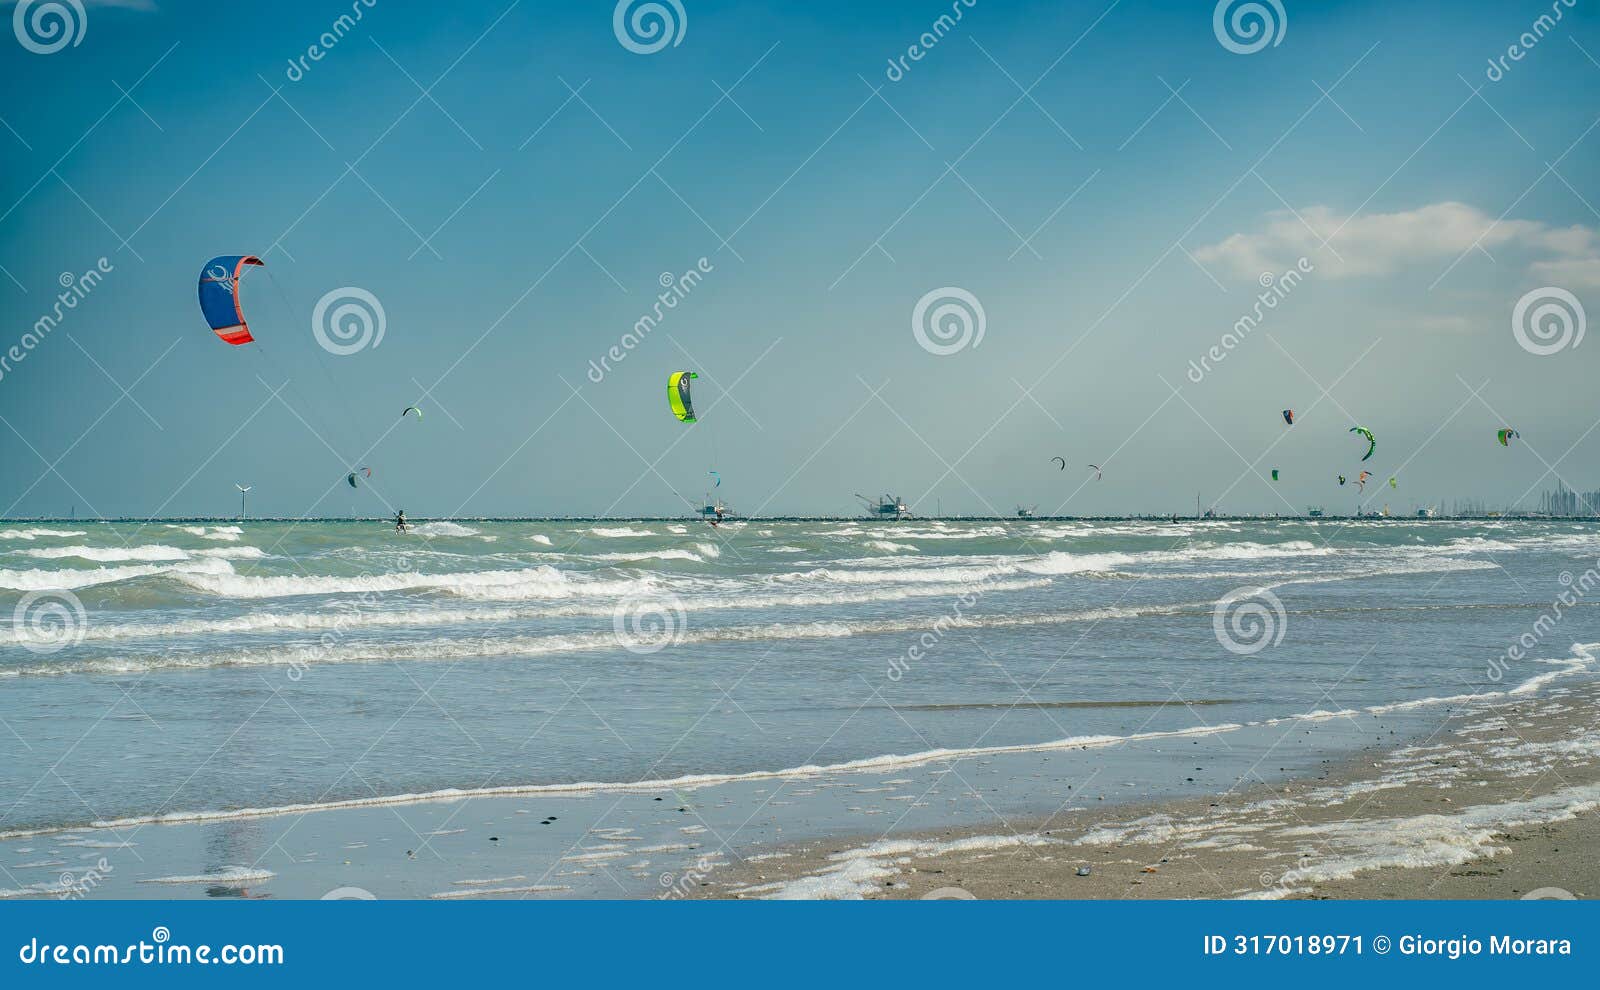 early summer windy day on an adriatic sea beach